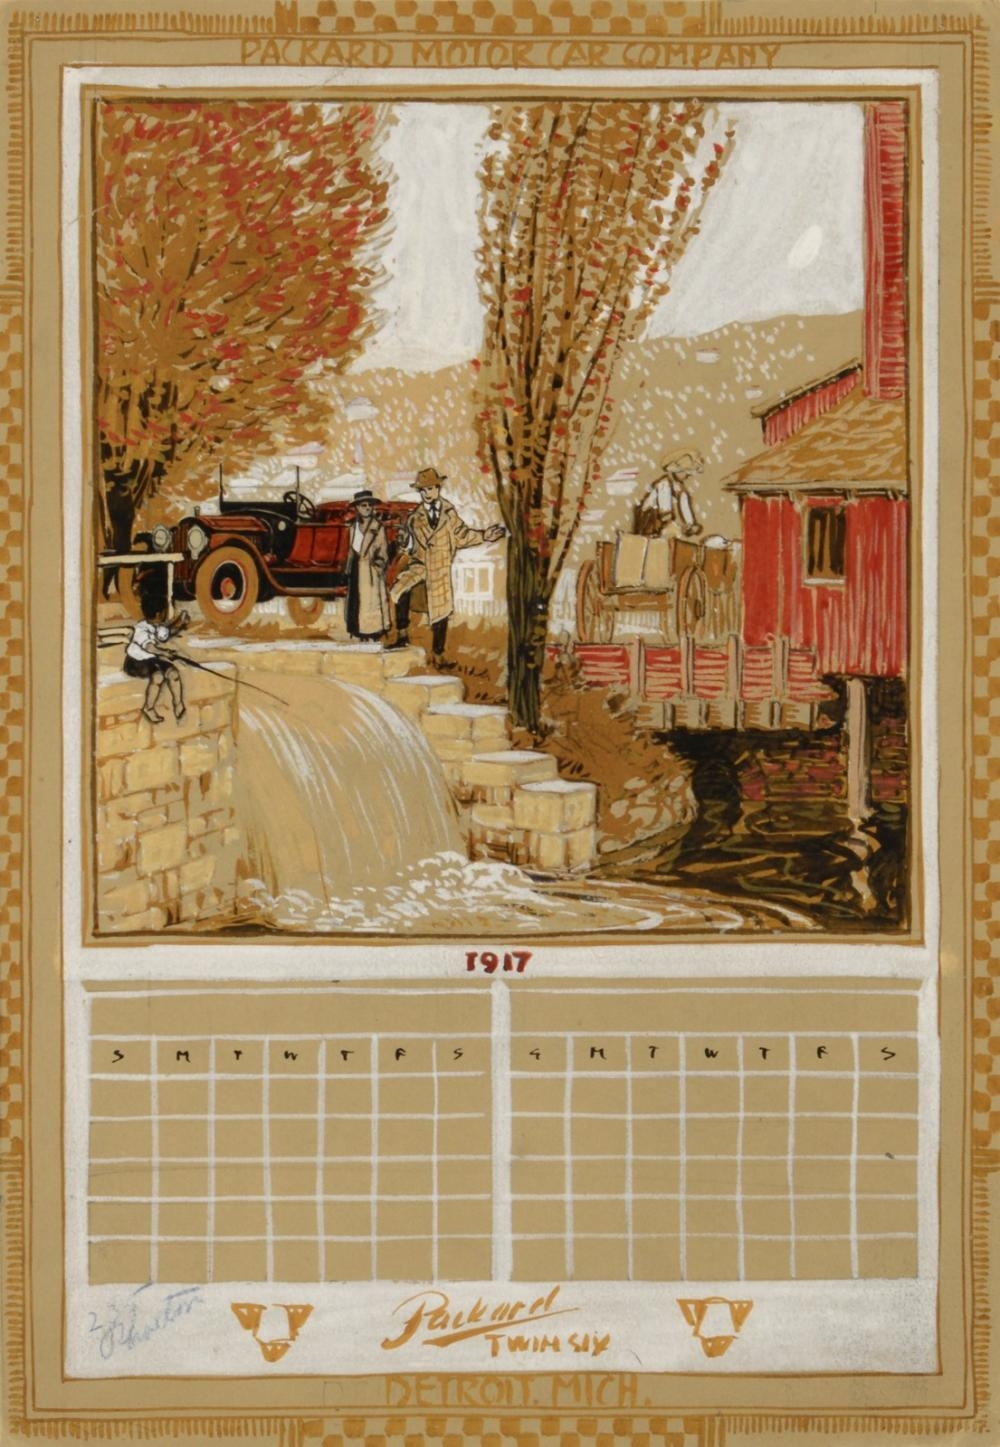 Gustave Baumann Packard Motor Car Company 1917 Calendar May/June